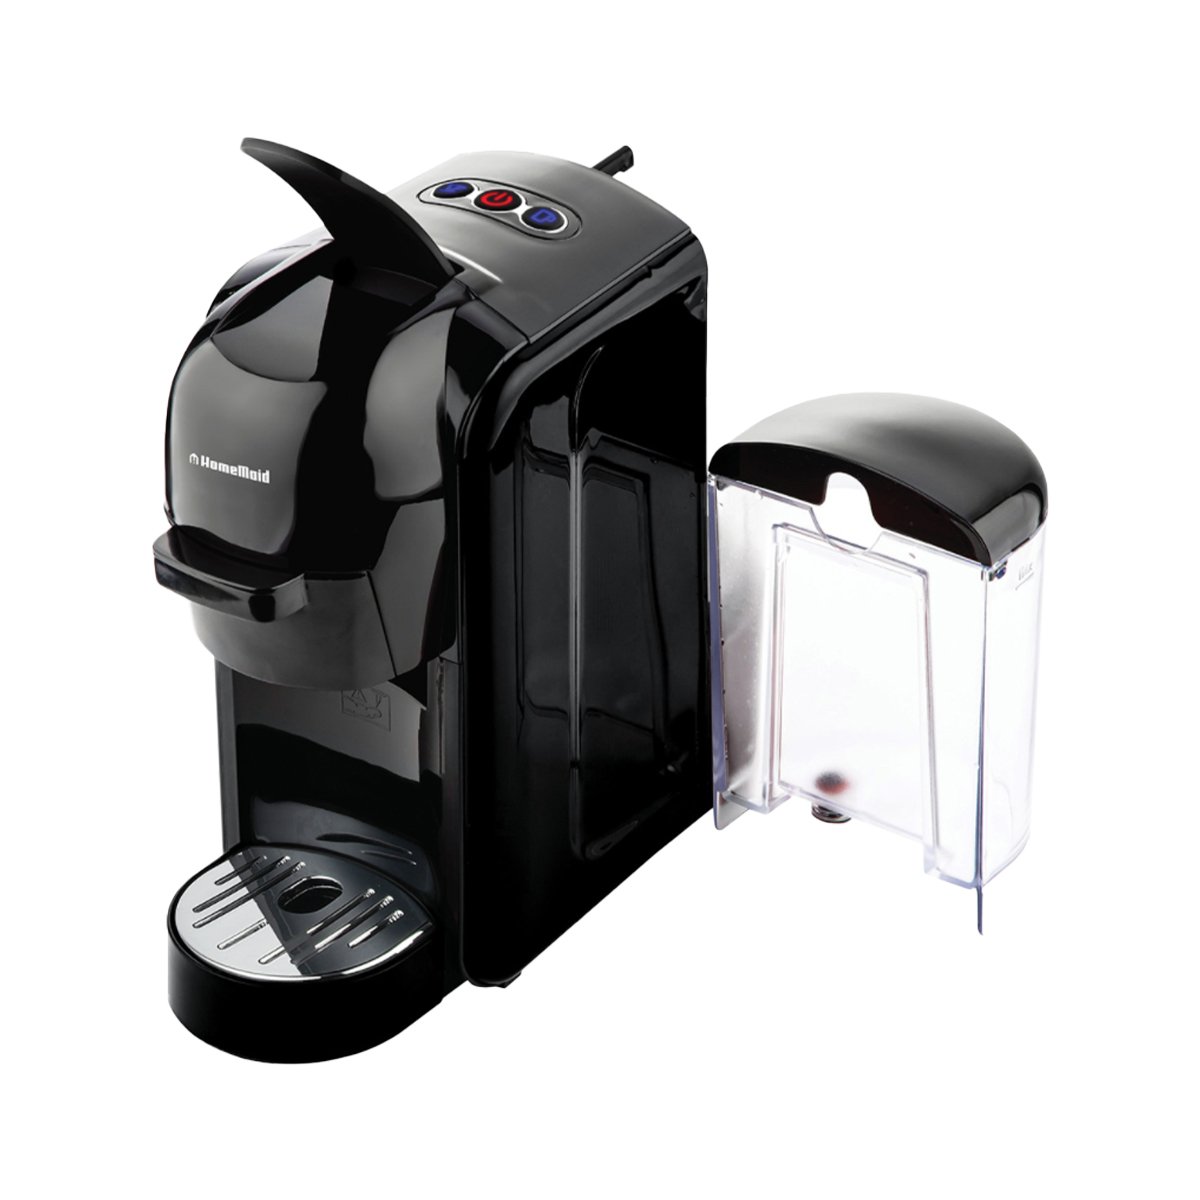 3-in-1 Cm511hm Coffee Multi Capsule Pod Machine